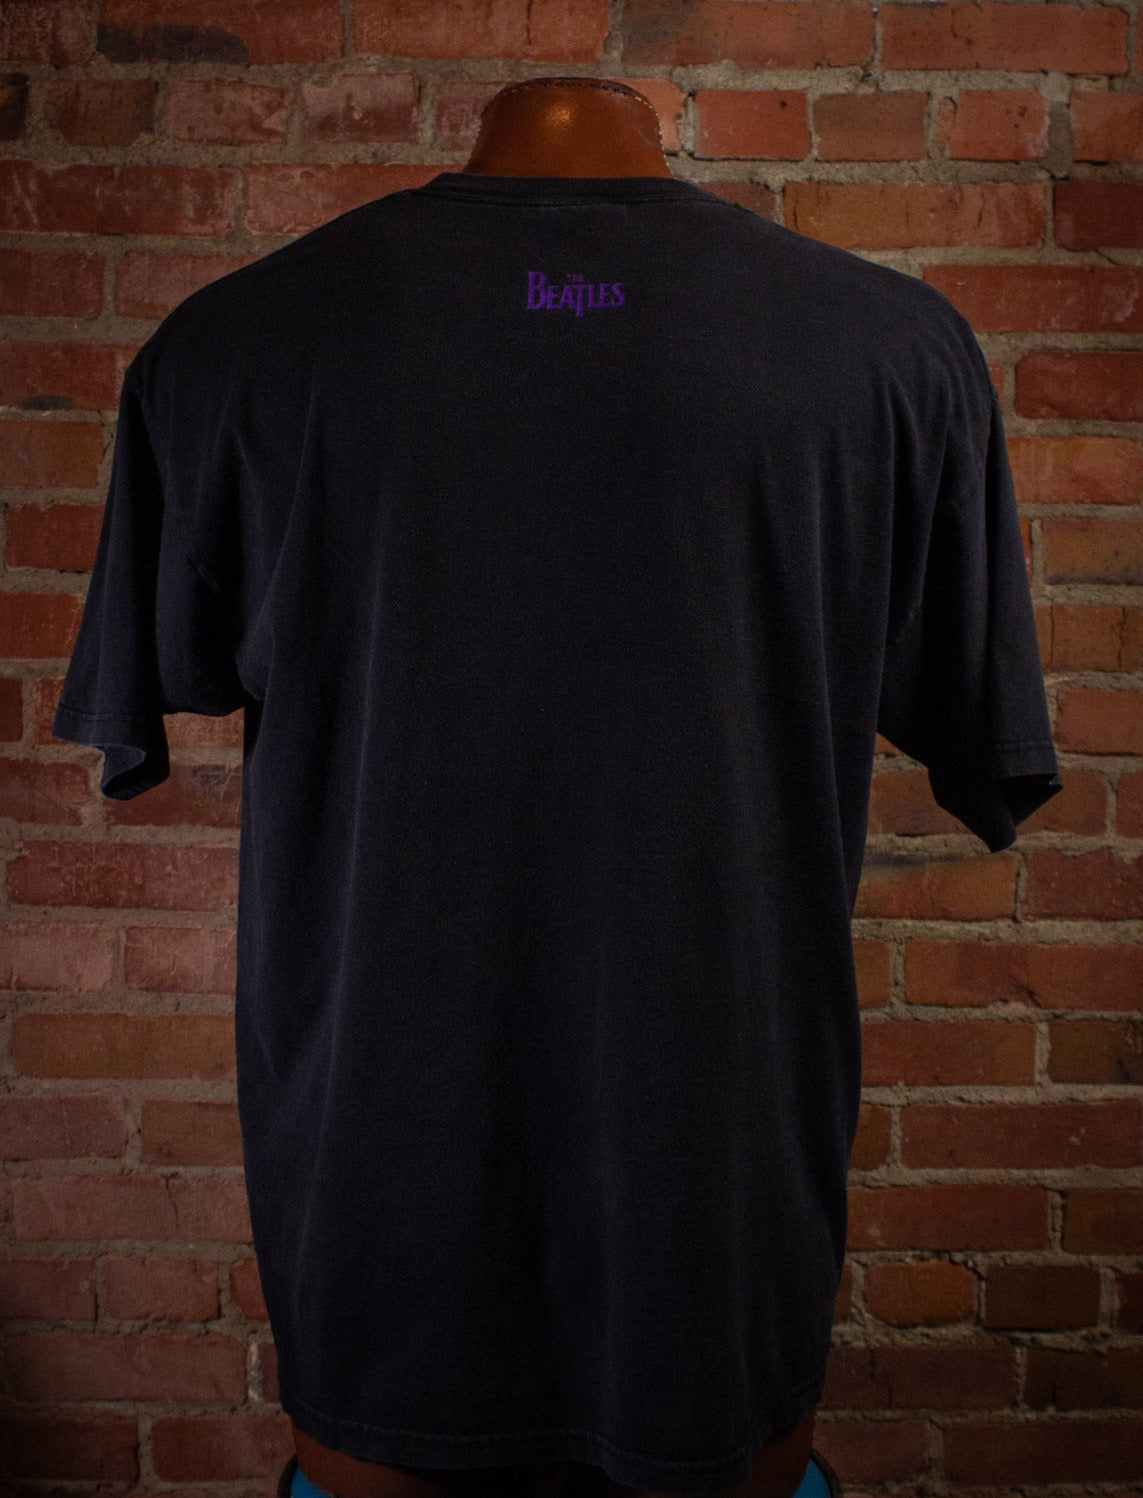 Vintage Beatles Neon Psychedelic Graphic T Shirt 1998 Black XL